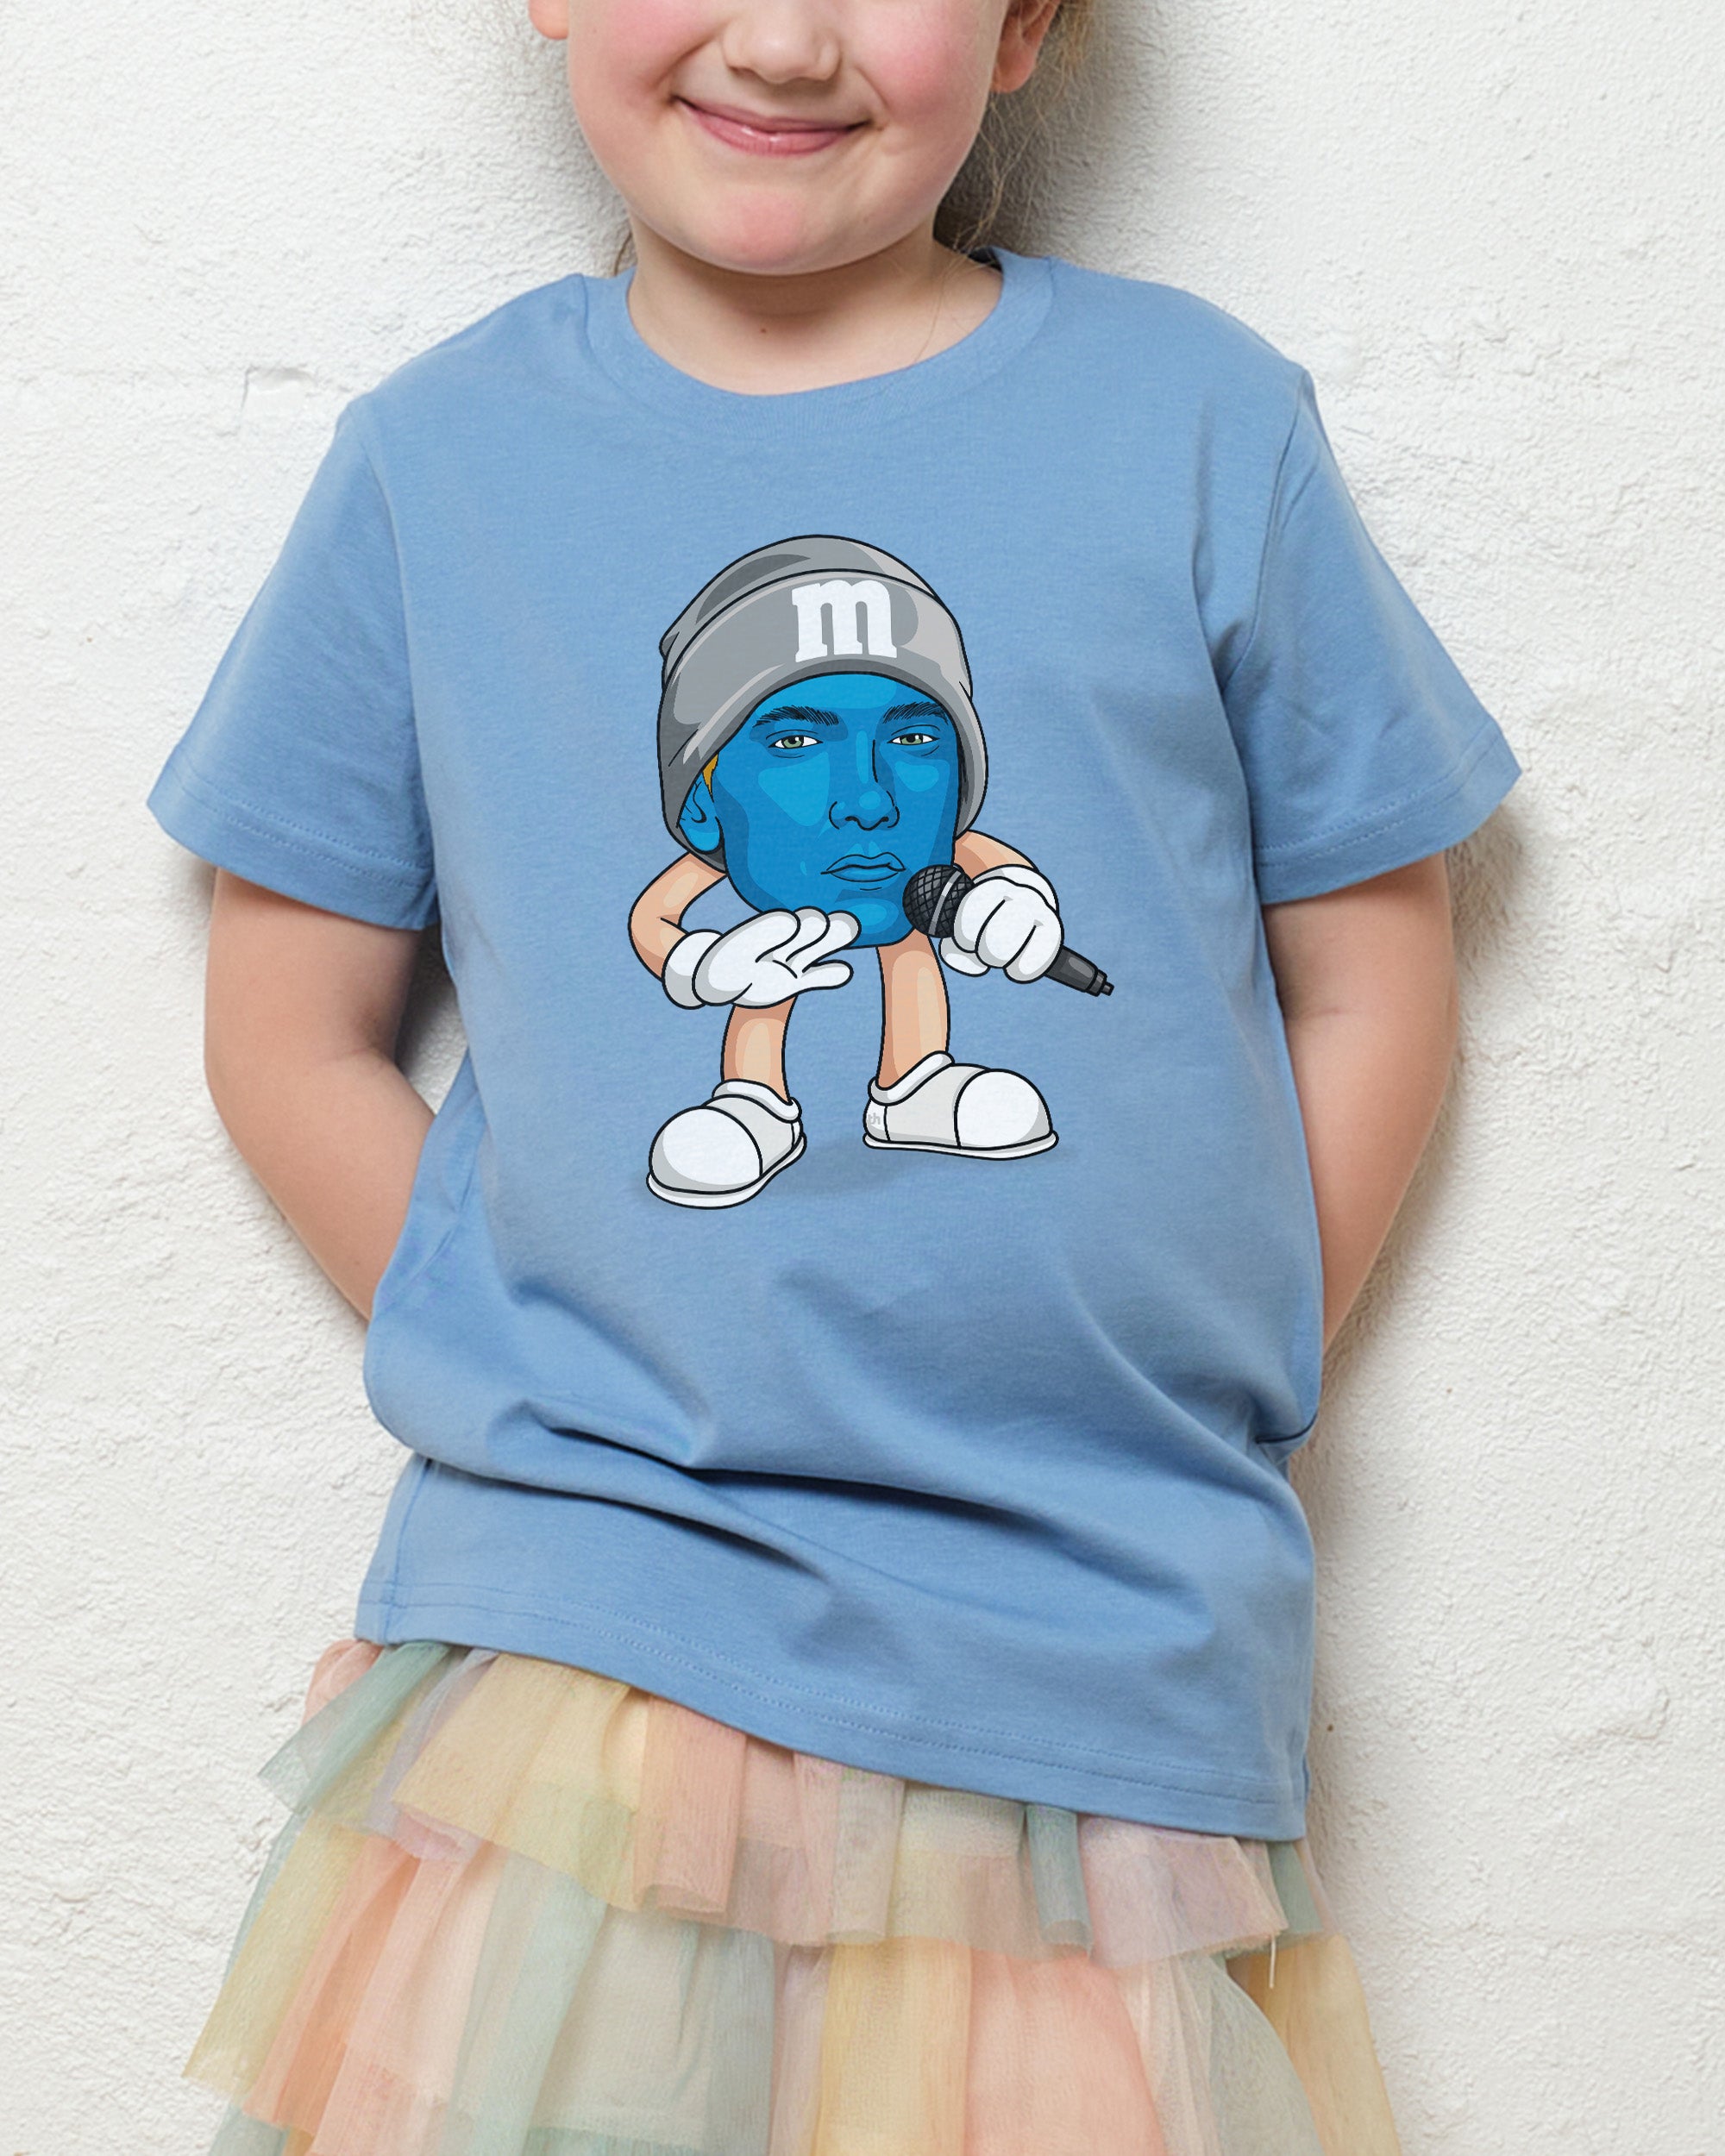 EmineM's Kids T-Shirt Australia Online